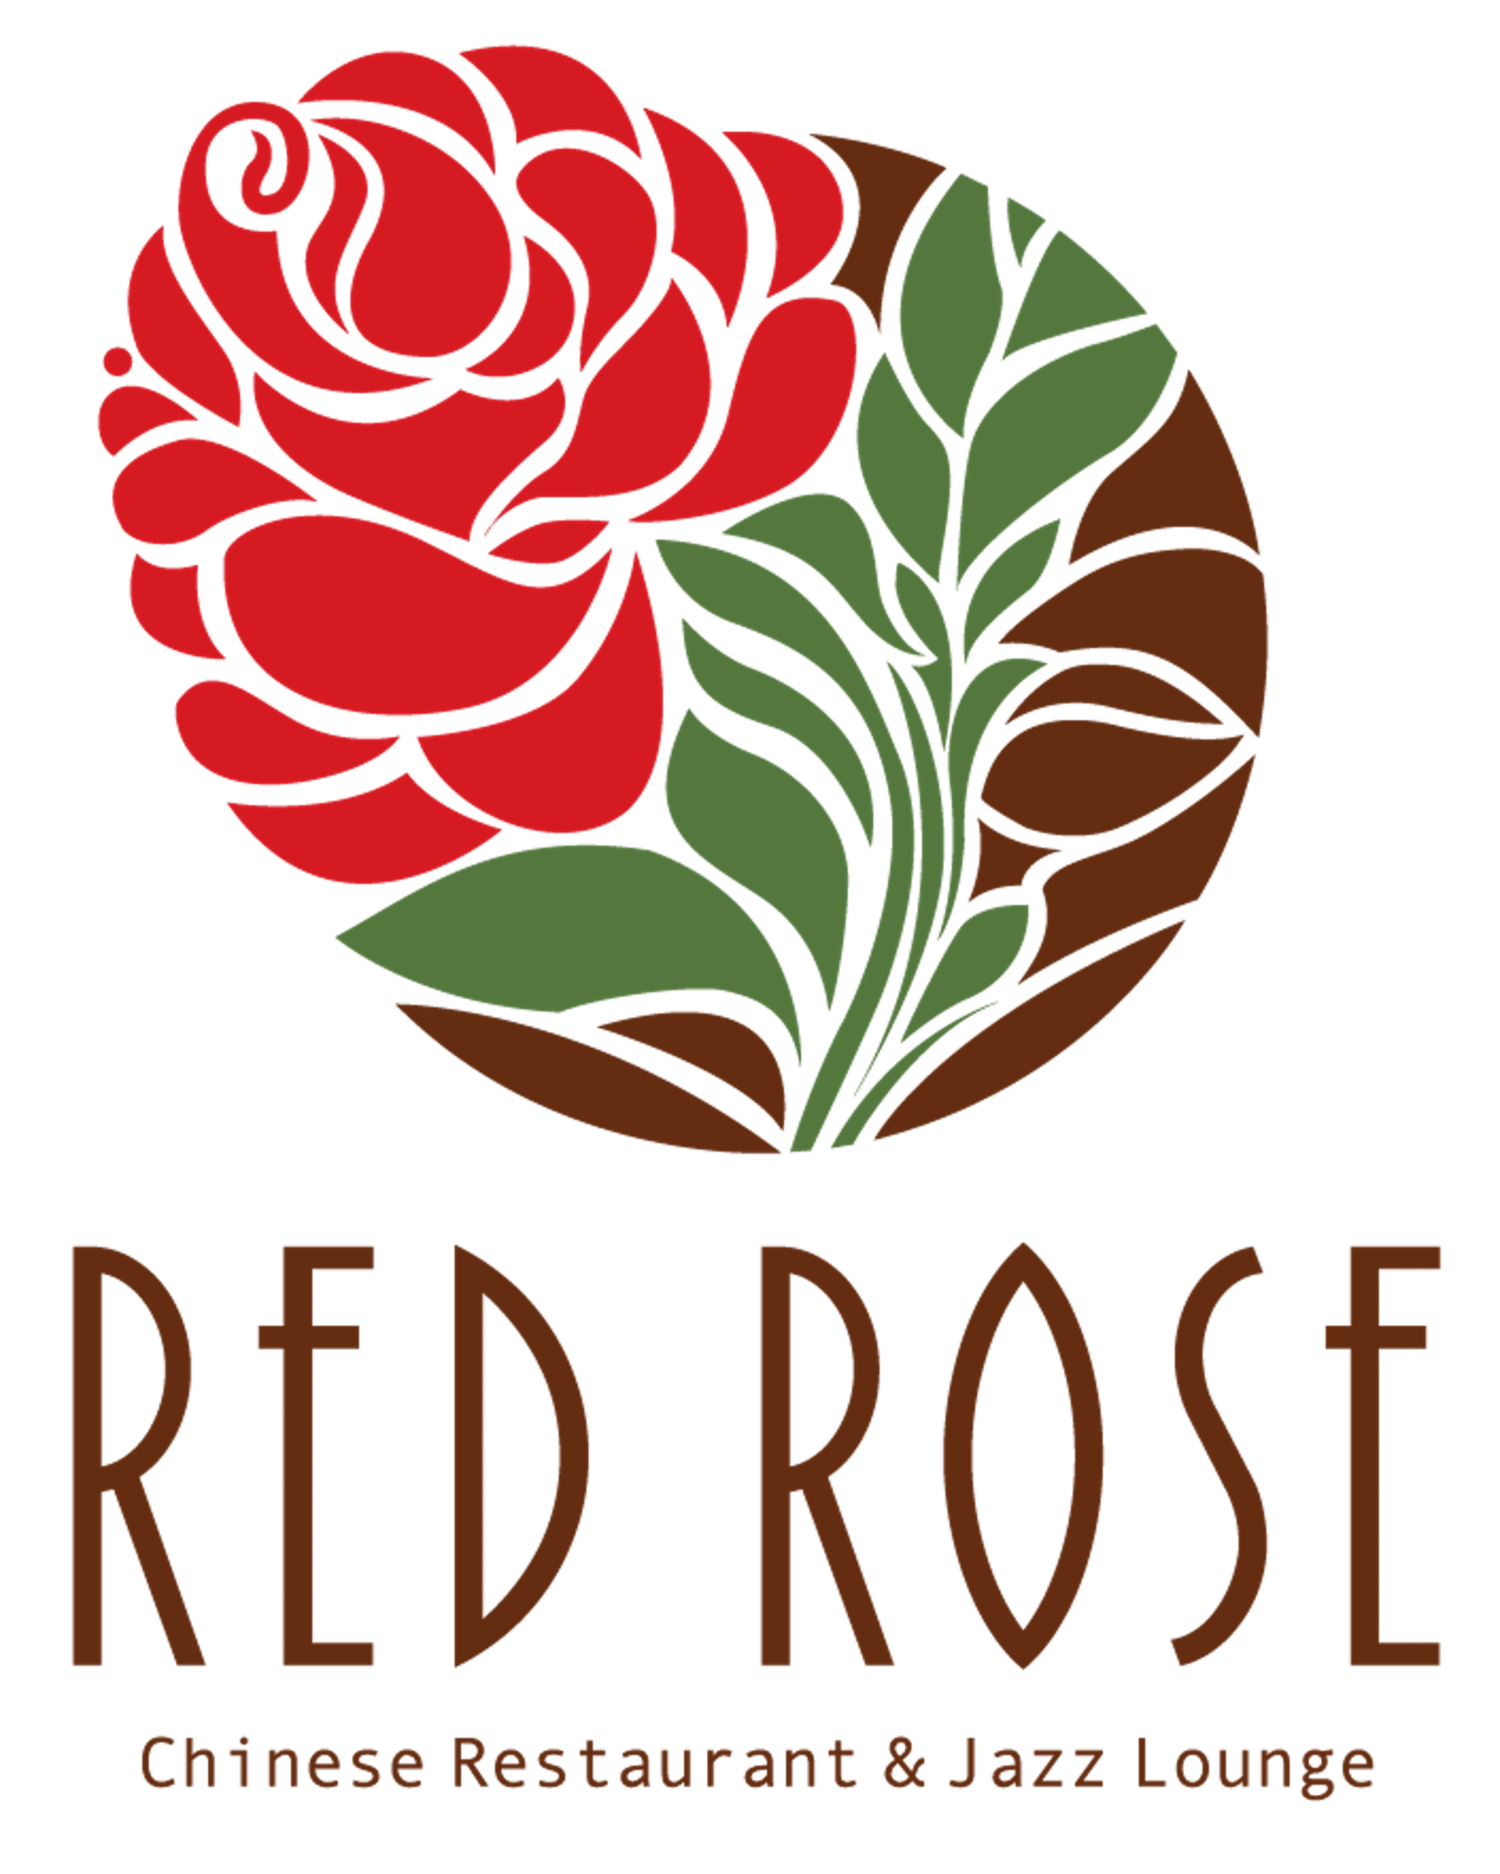 Red Rose in Bangkok